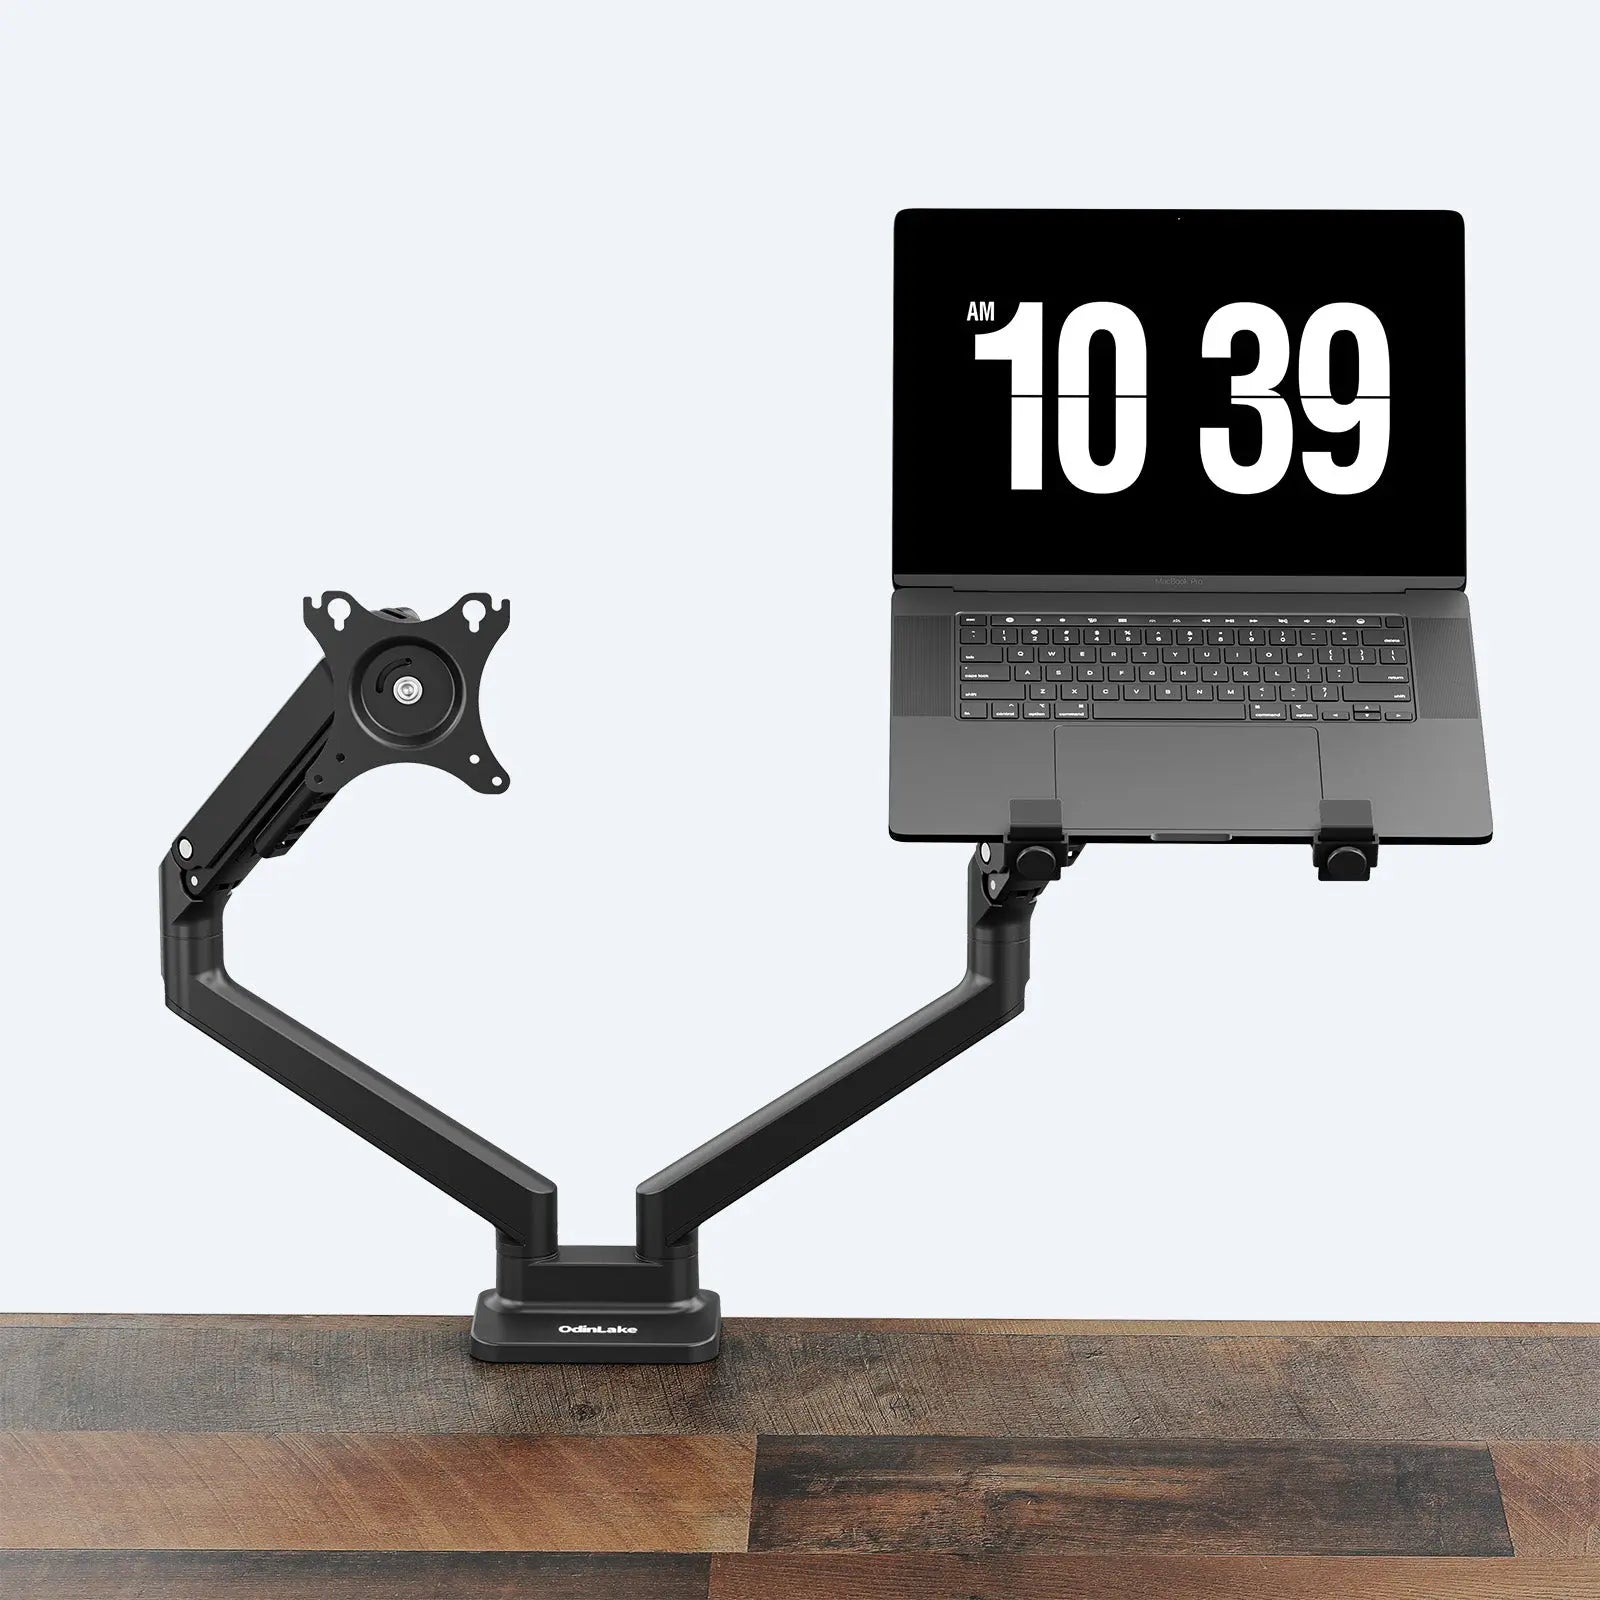 OdinLake Dual Arm Monitor Stand + Laptop Stand OdinLake